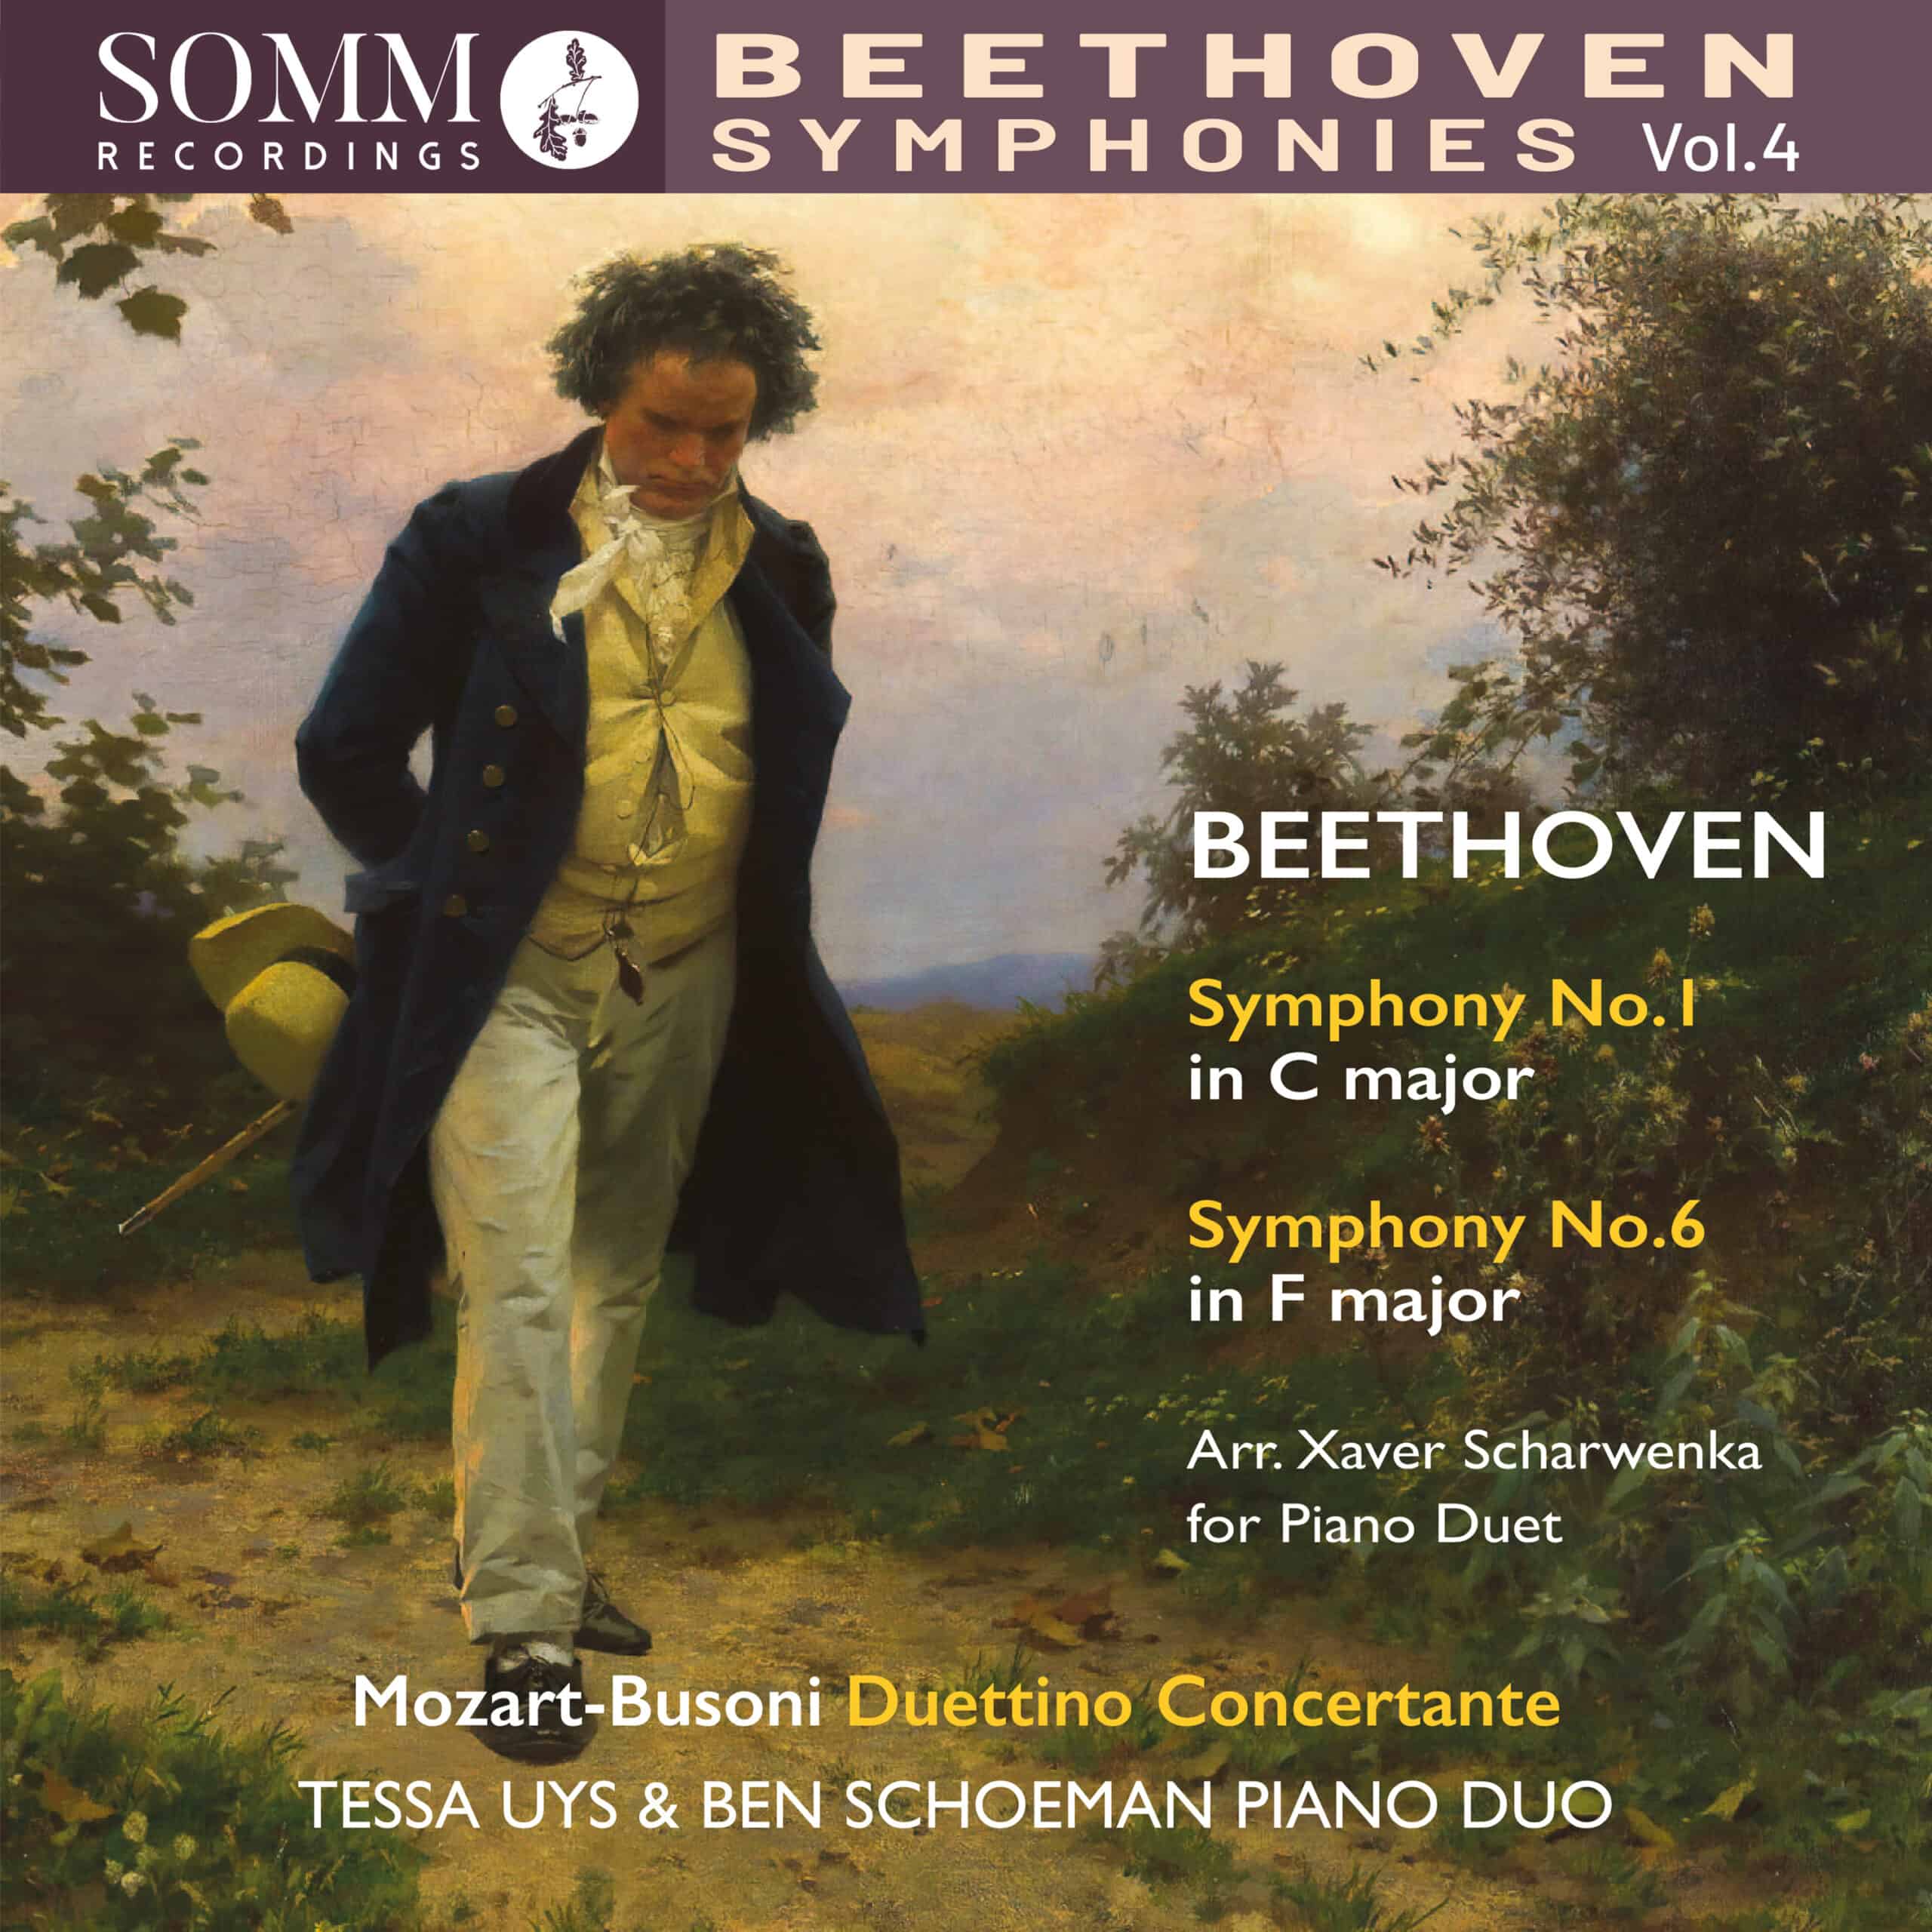 Beethoven Symphonies, Volume 4